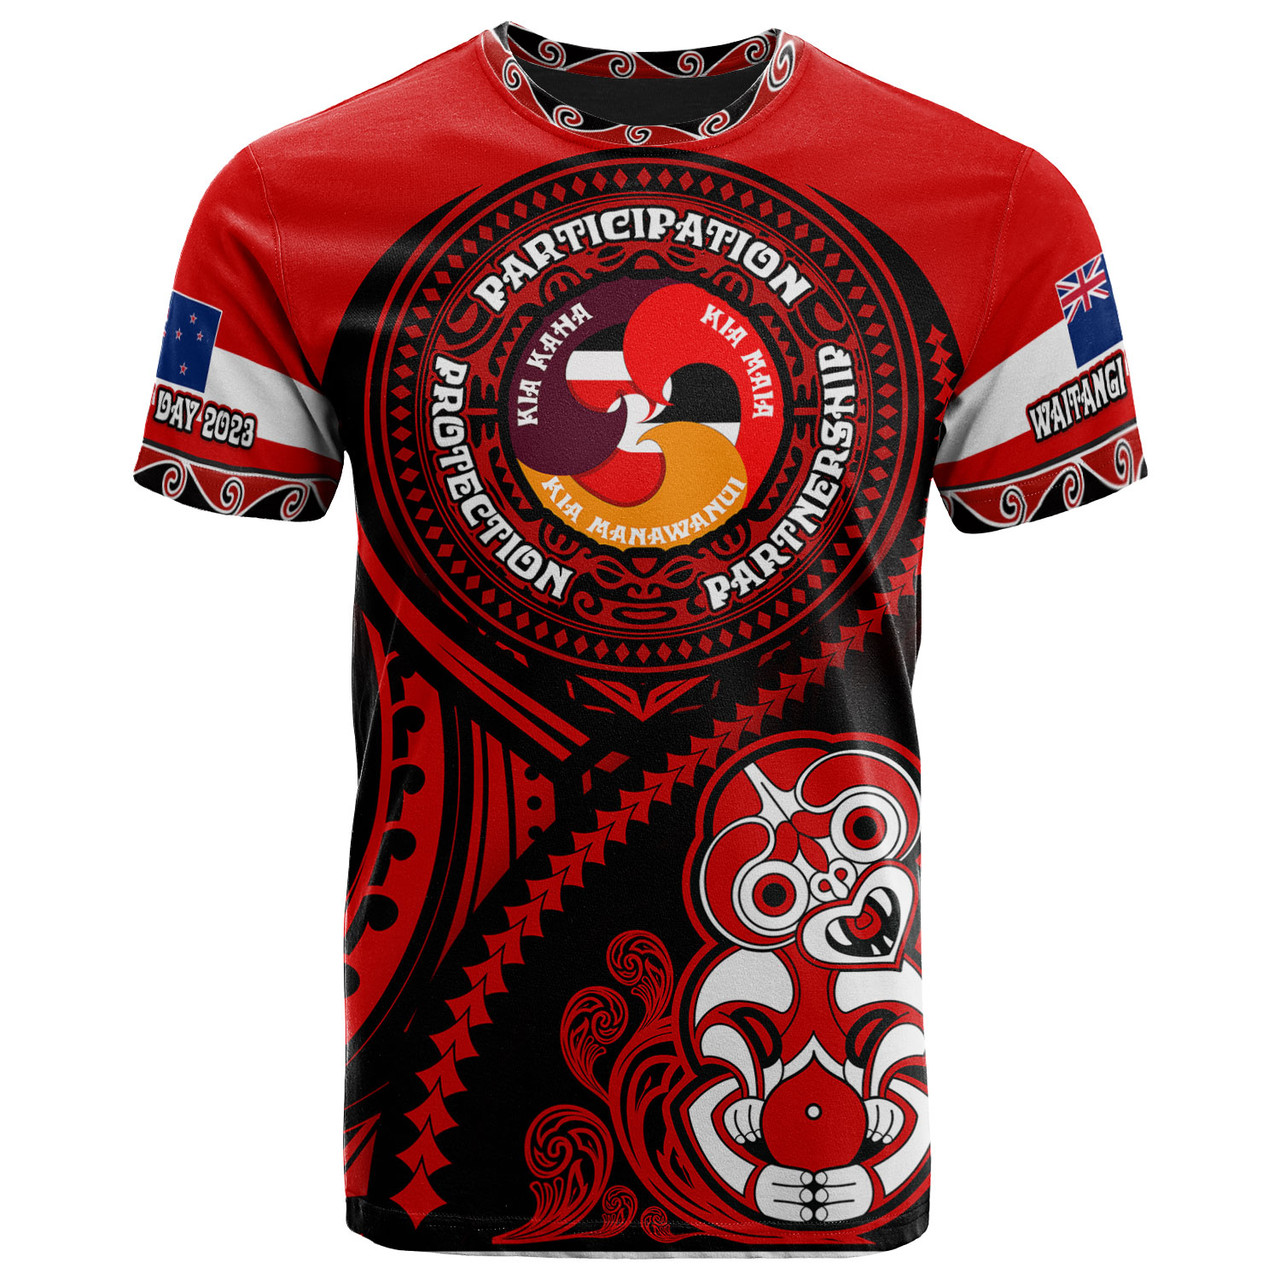 New Zealand Waitangi Day T-Shirt - Three Treaty of Waitangi Principles T-shirt